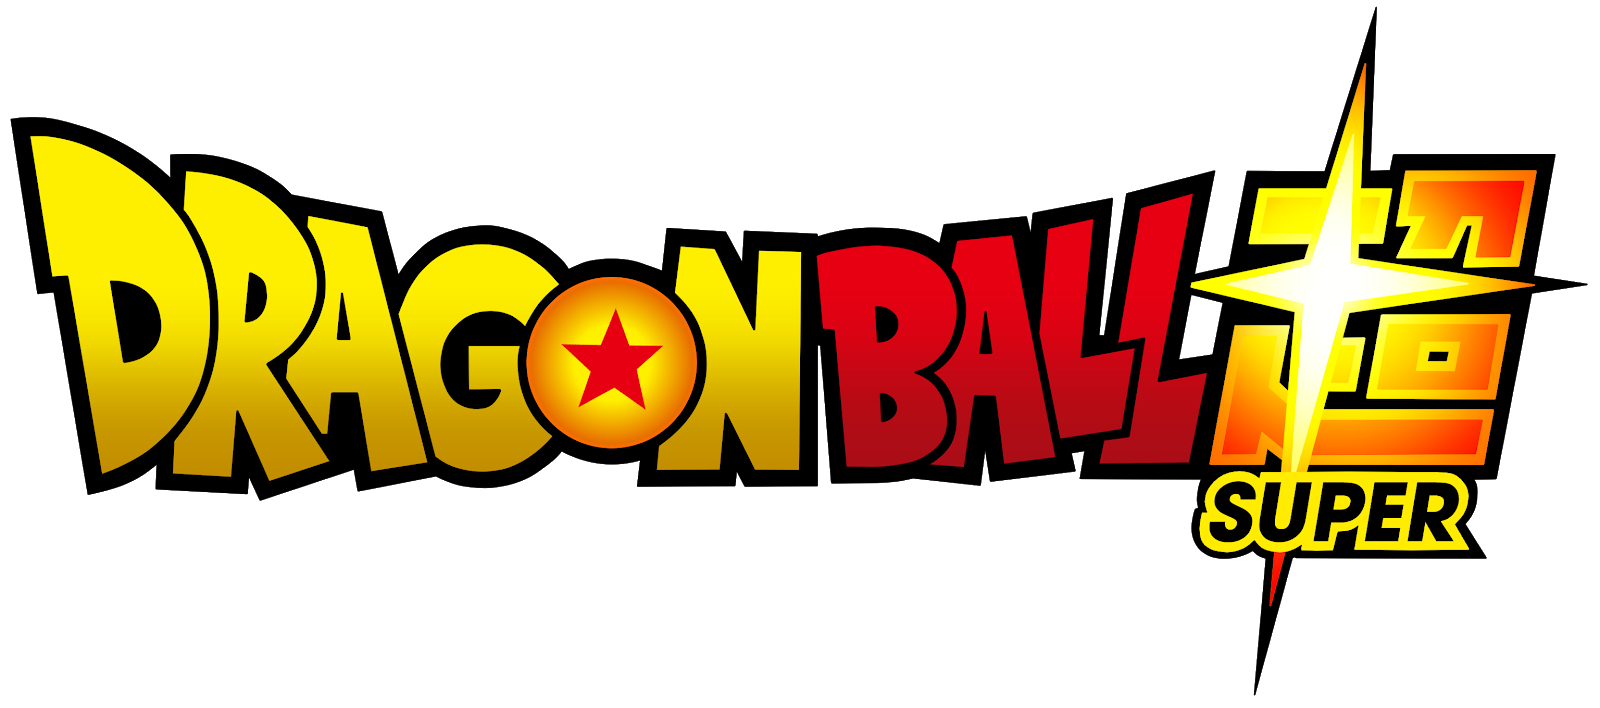 Dragon Ballz Media